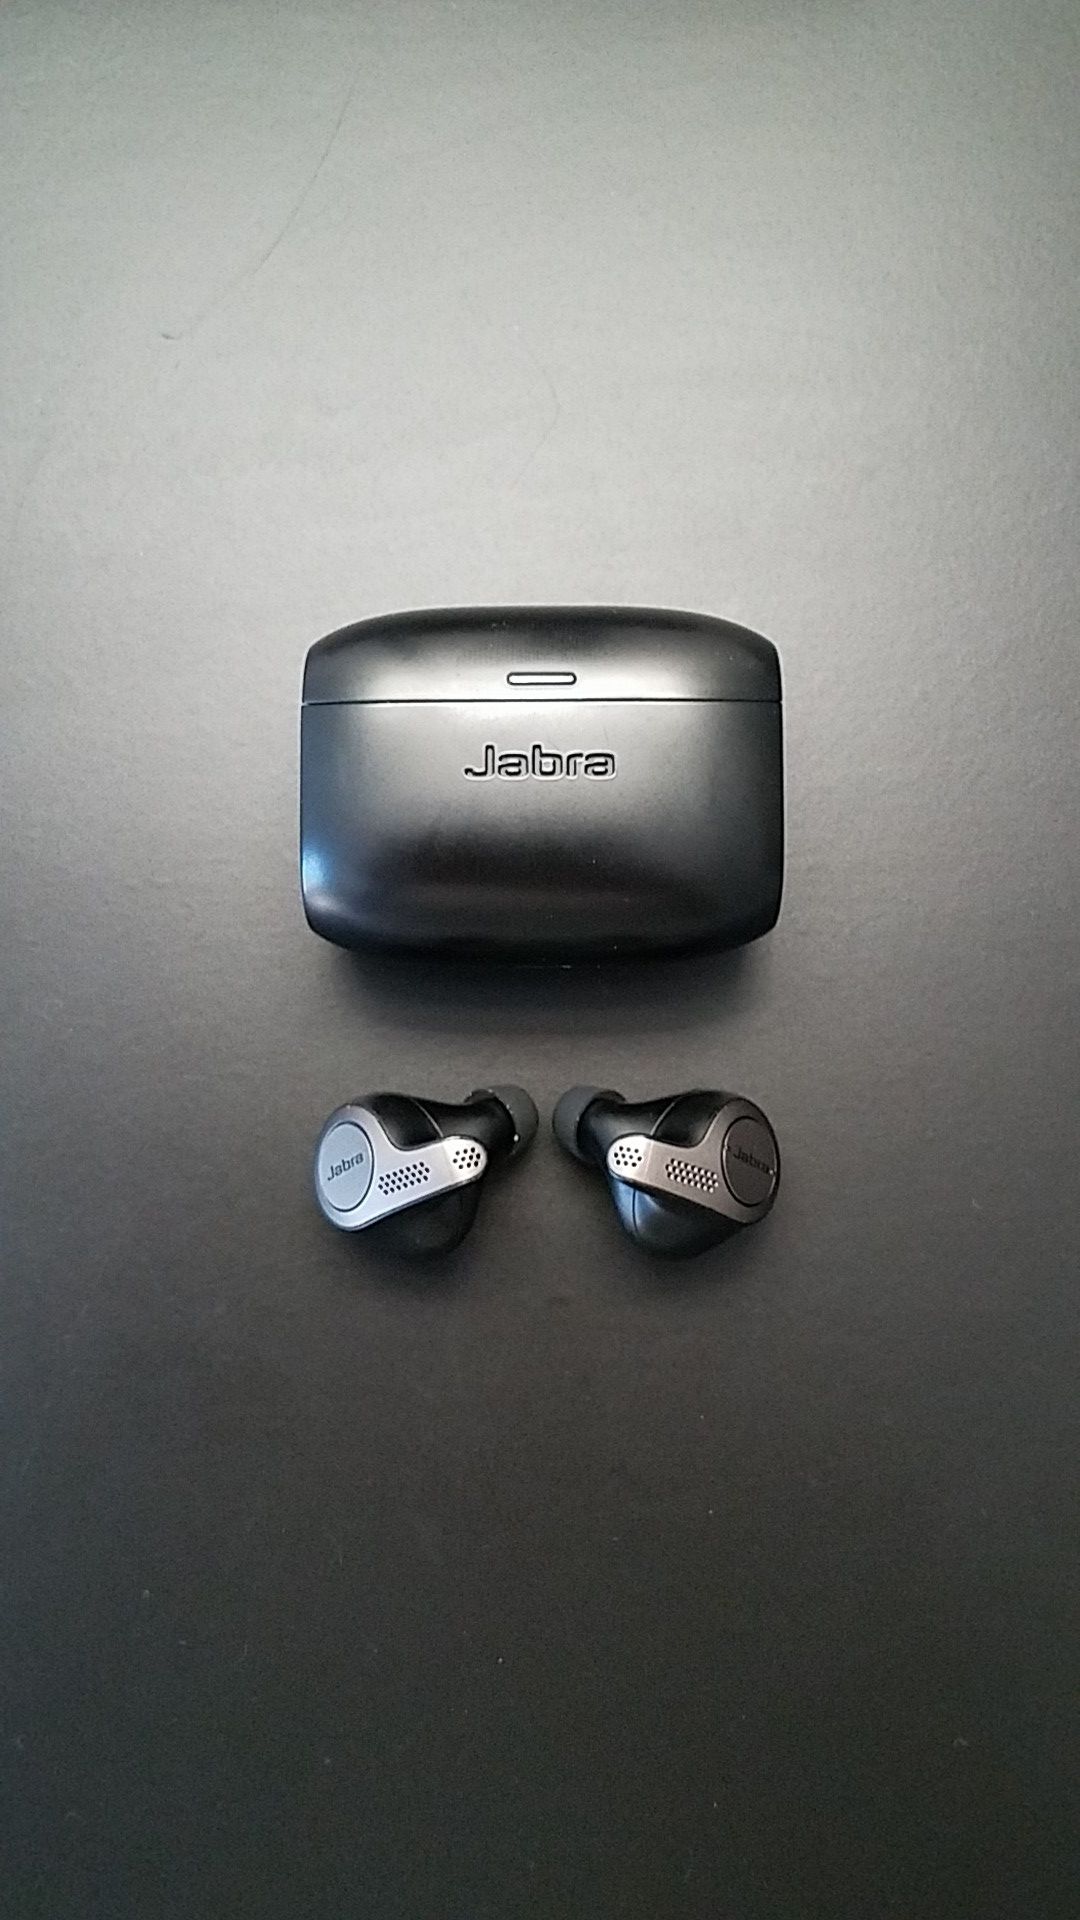 Jabra Elite 65t true wireless earbuds